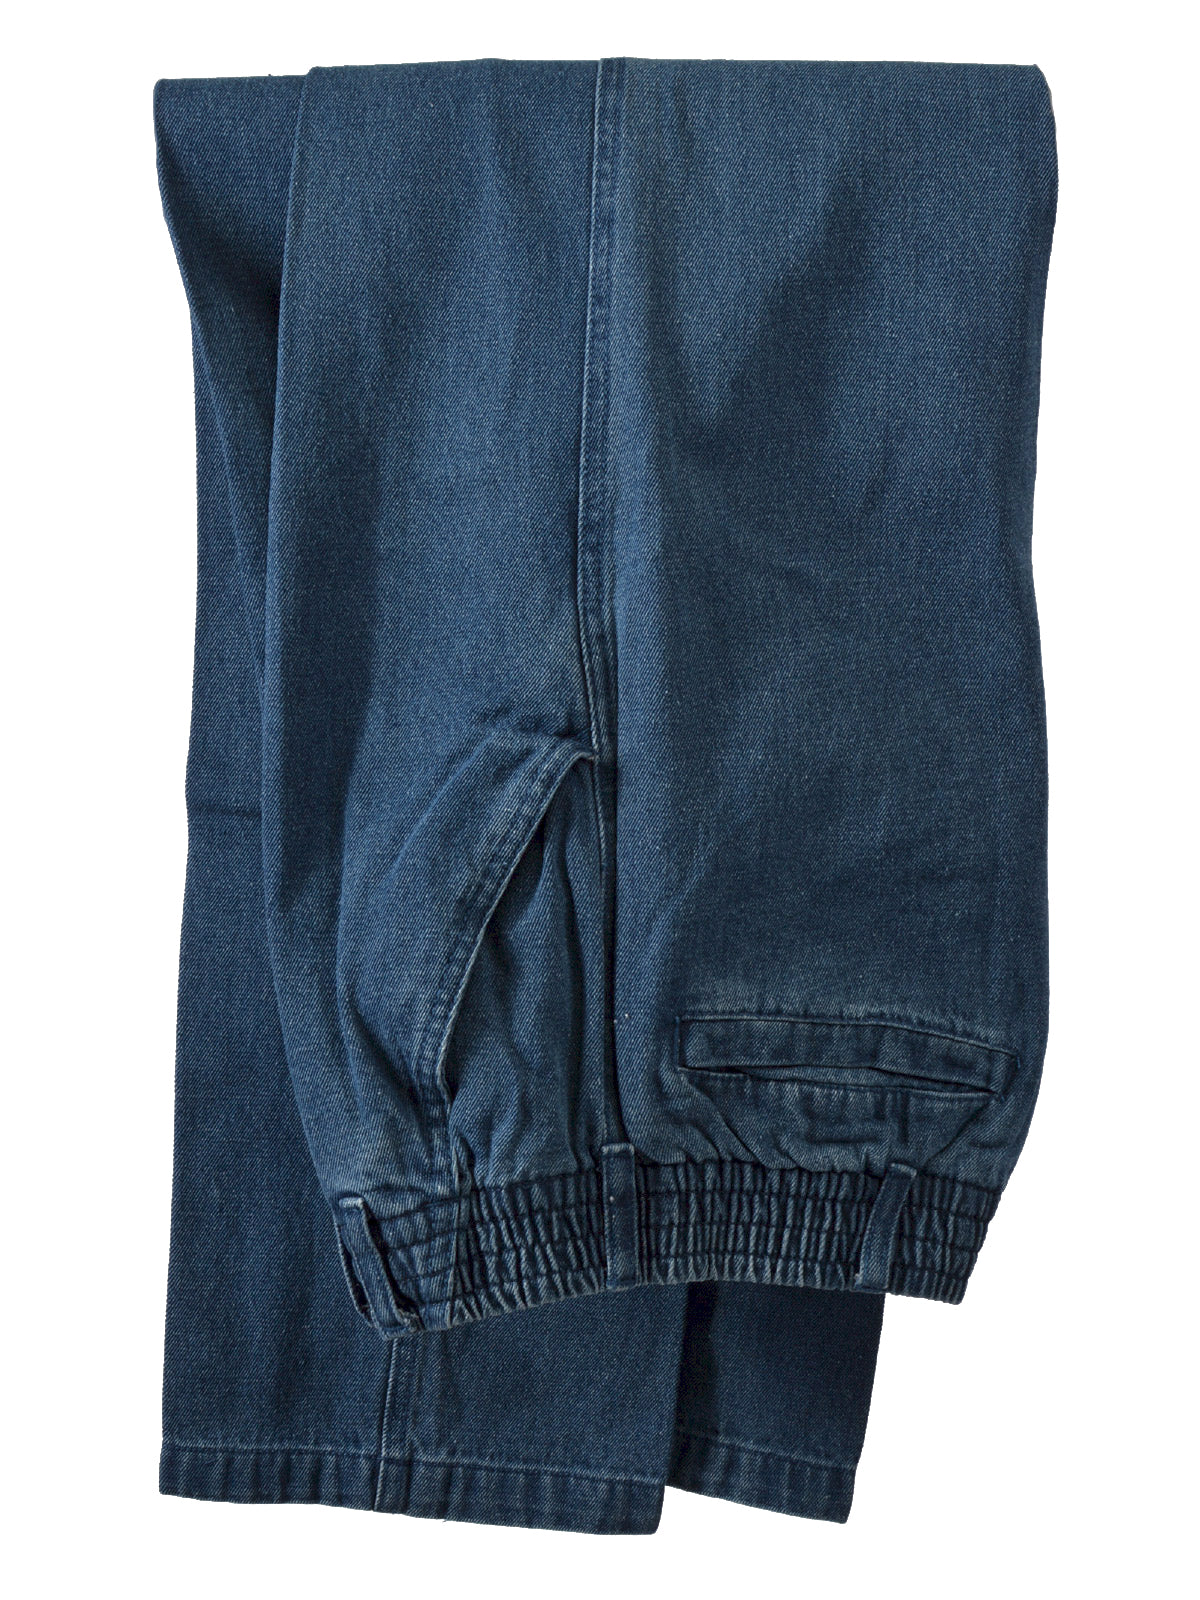 Lord Daniel Full Elastic Waist Jeans for Men - Big Man Sizes